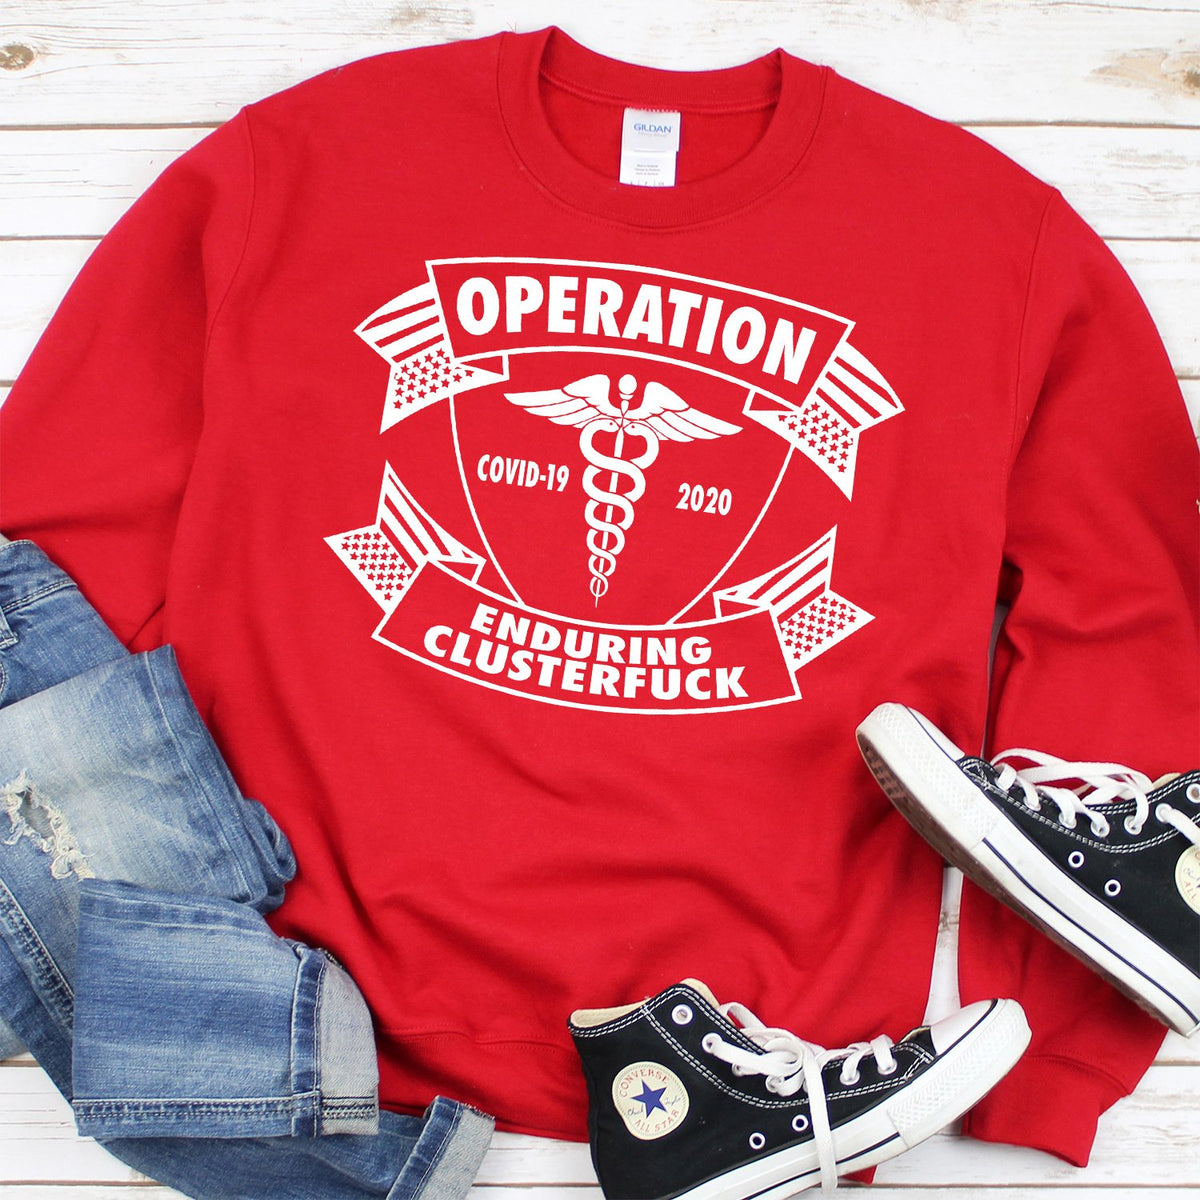 Operation Covid-19 2020 Enduring Clusterfuck - Long Sleeve Heavy Crewneck Sweatshirt